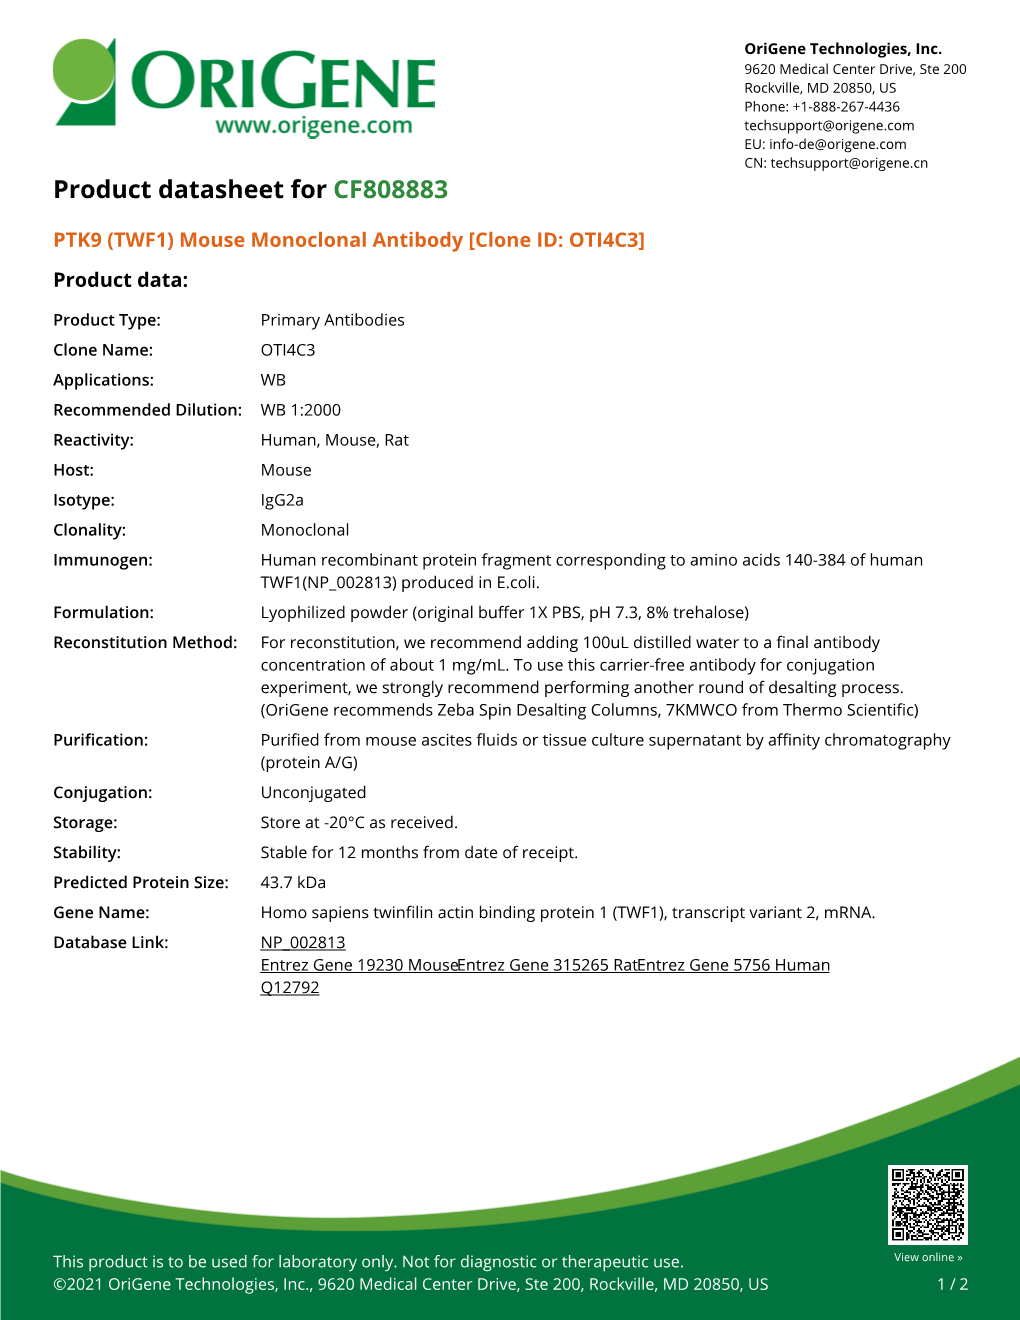 TWF1) Mouse Monoclonal Antibody [Clone ID: OTI4C3] Product Data